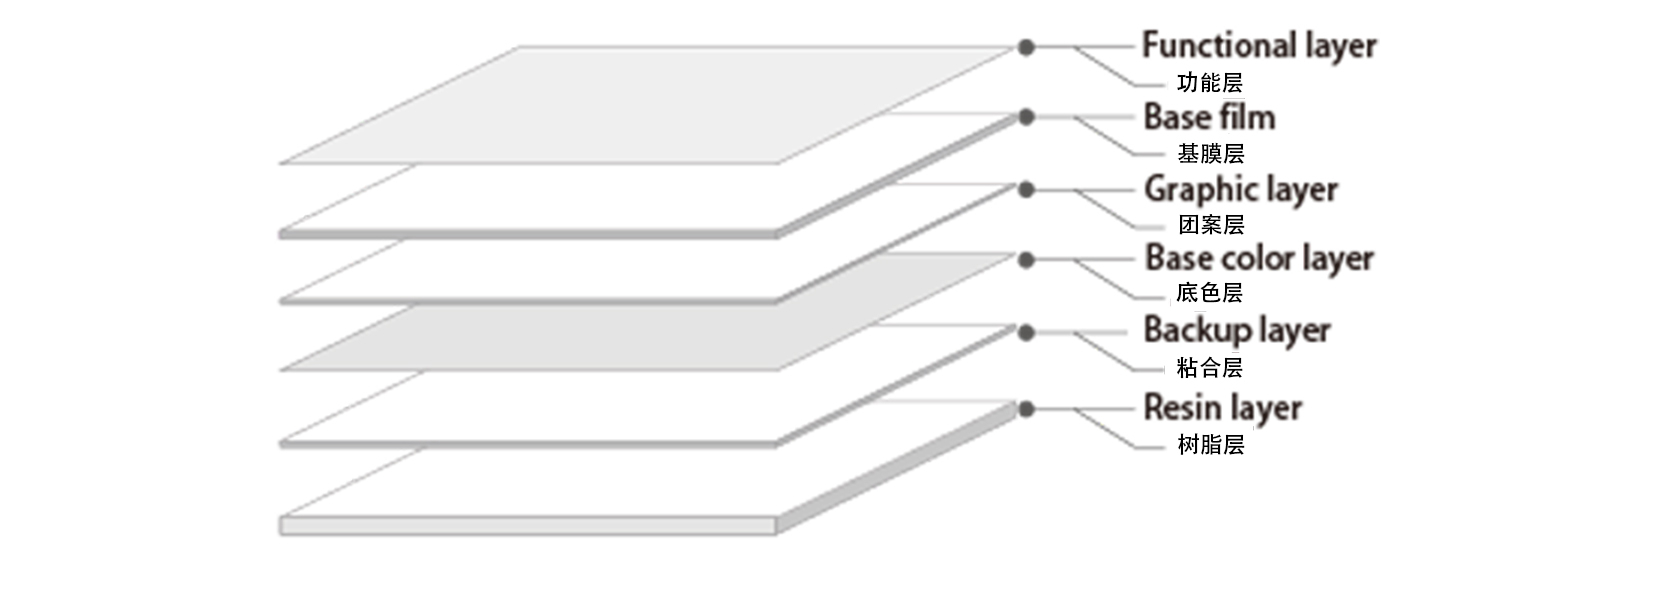 IMR-TJ process layering diagram